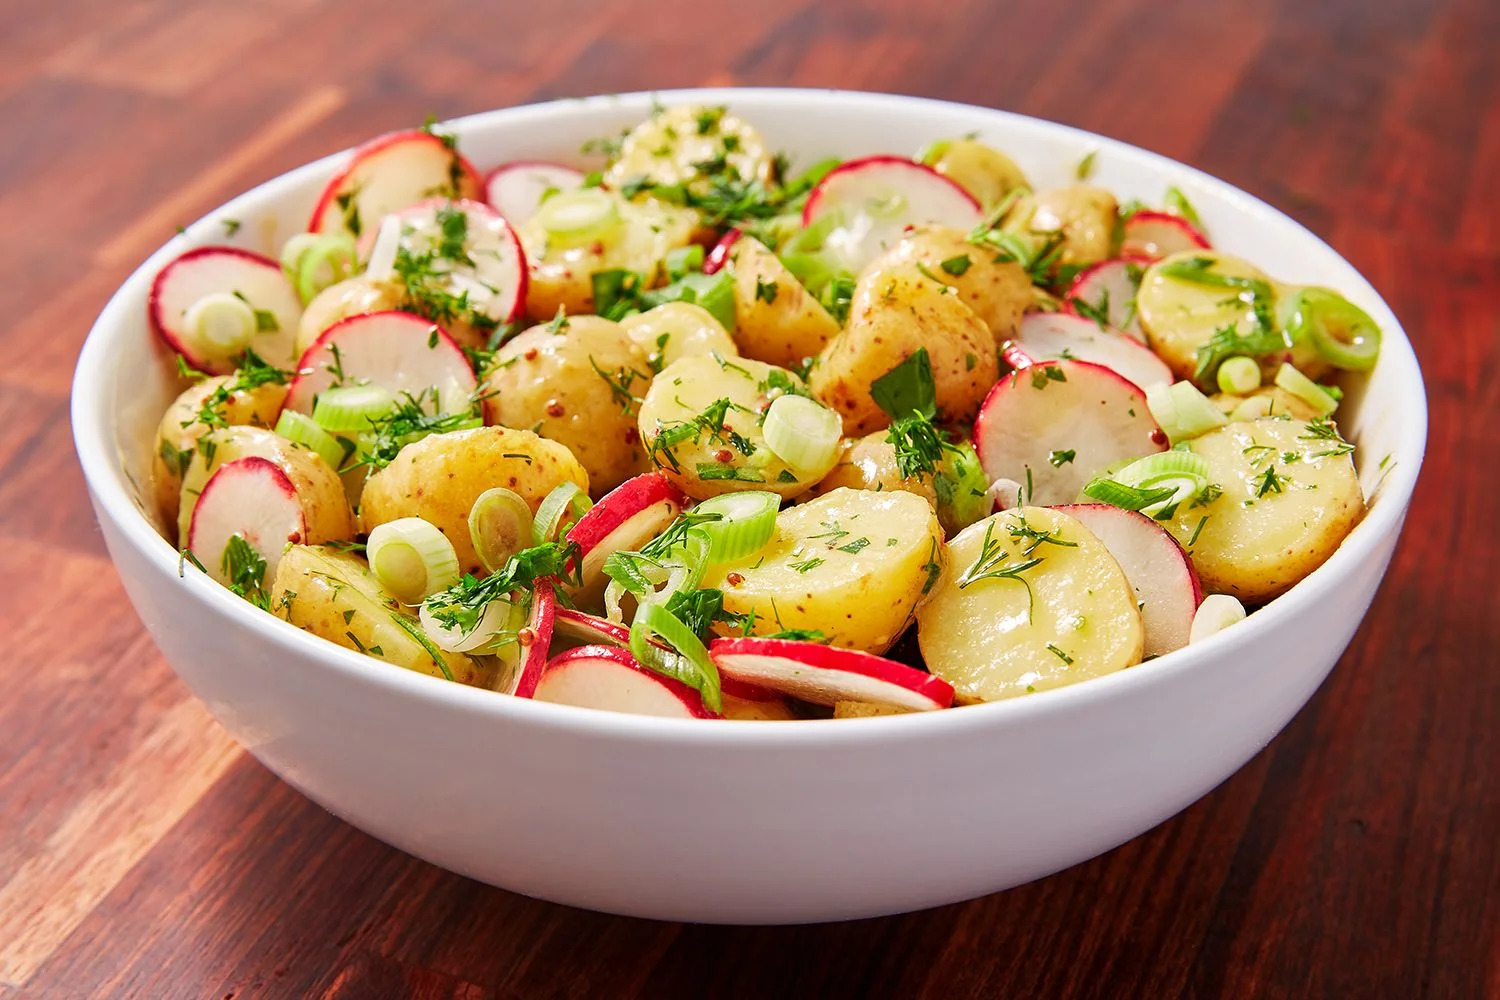 Potato Salad with vinegar dressing